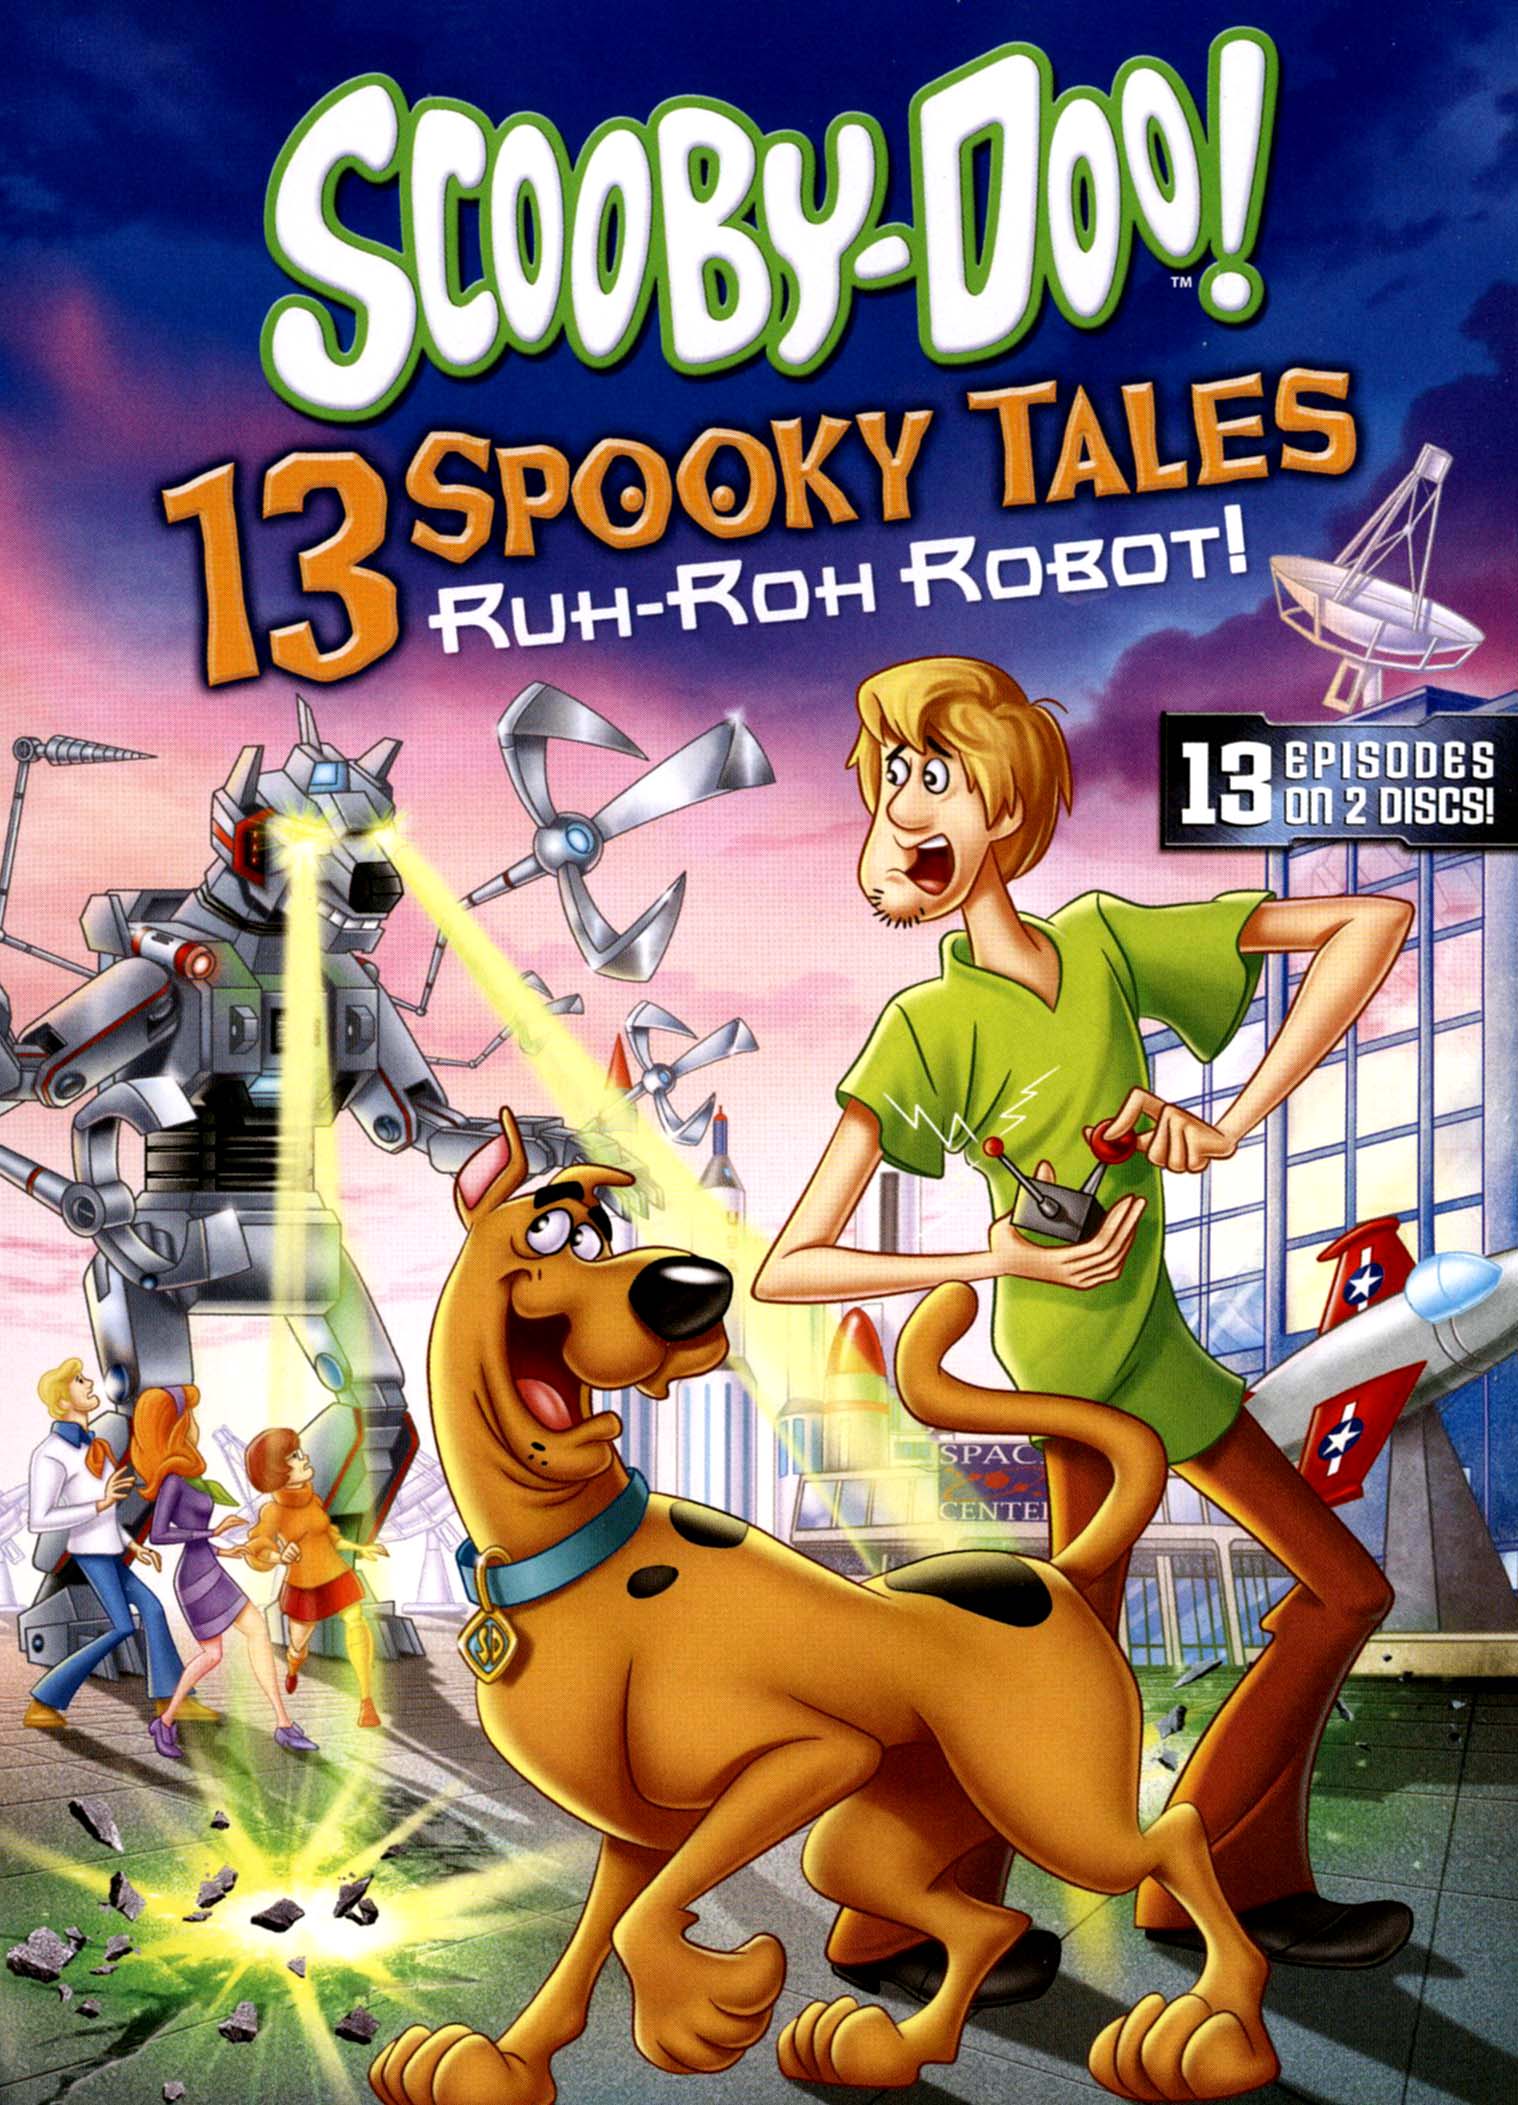 13 Spooky Ruh-Roh [2 [DVD] - Best Buy